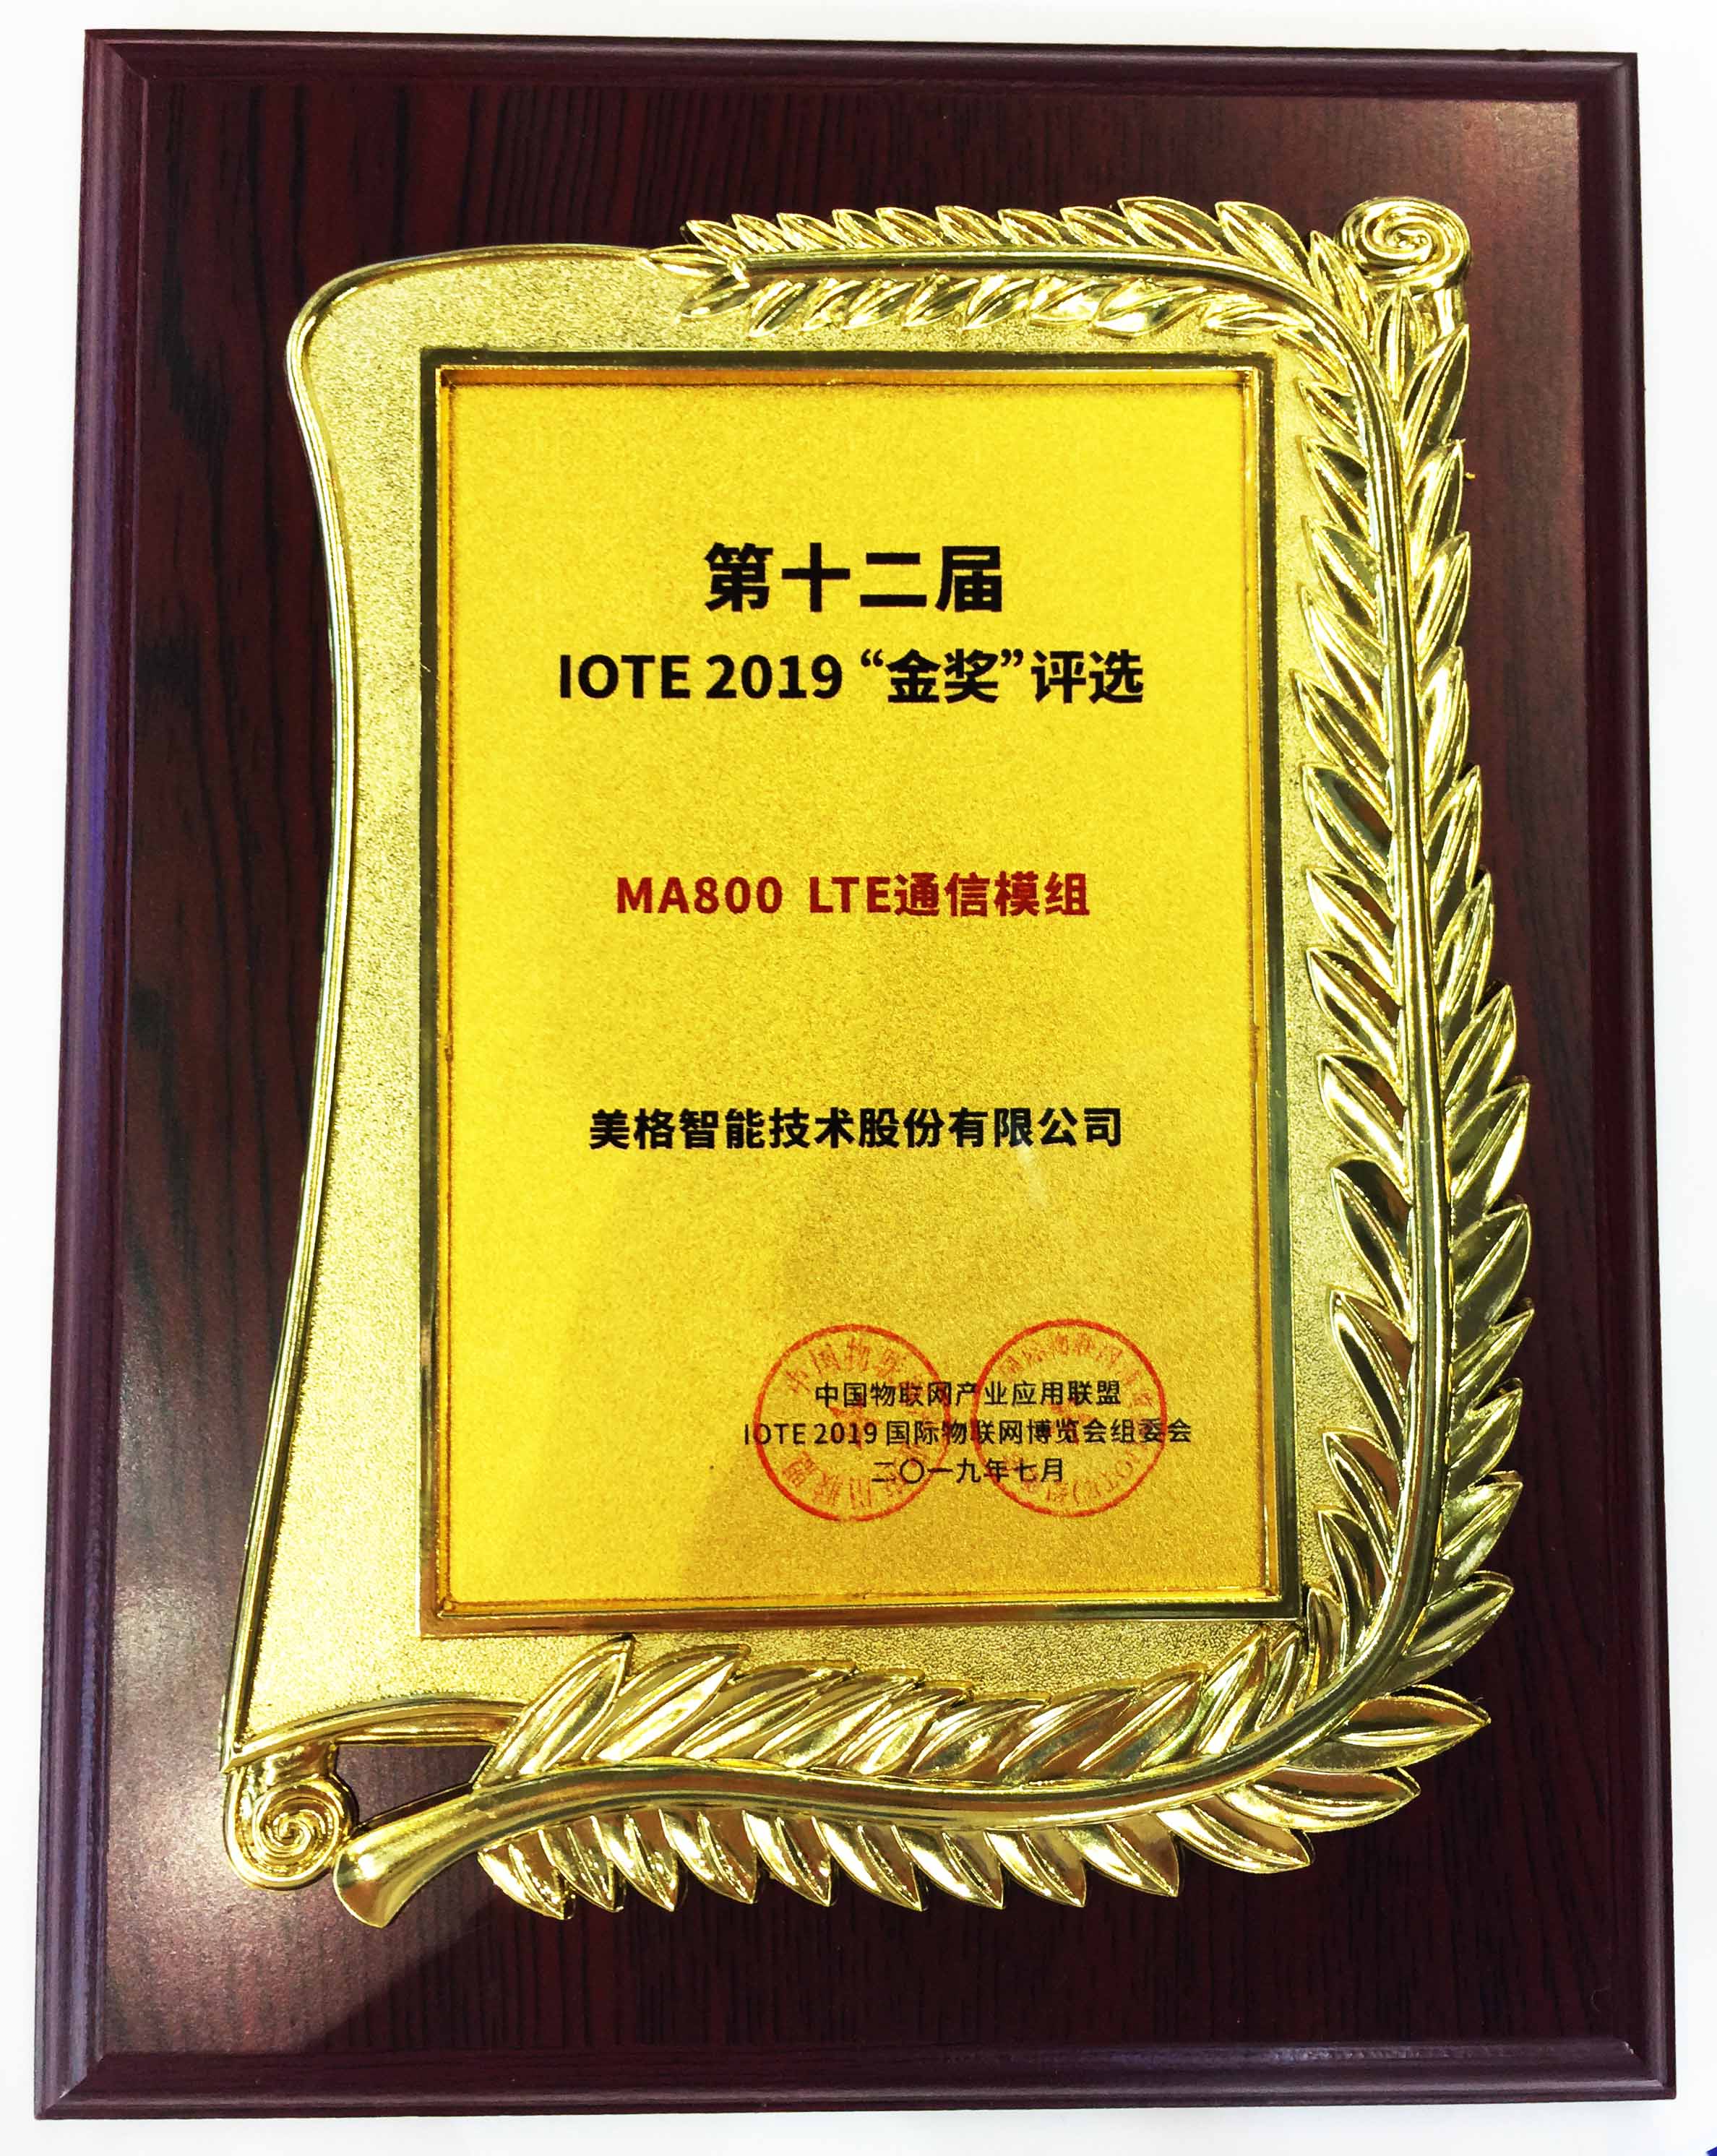 MA800 LTE通信模组荣获第十二届IOTE 2019 “金奖”